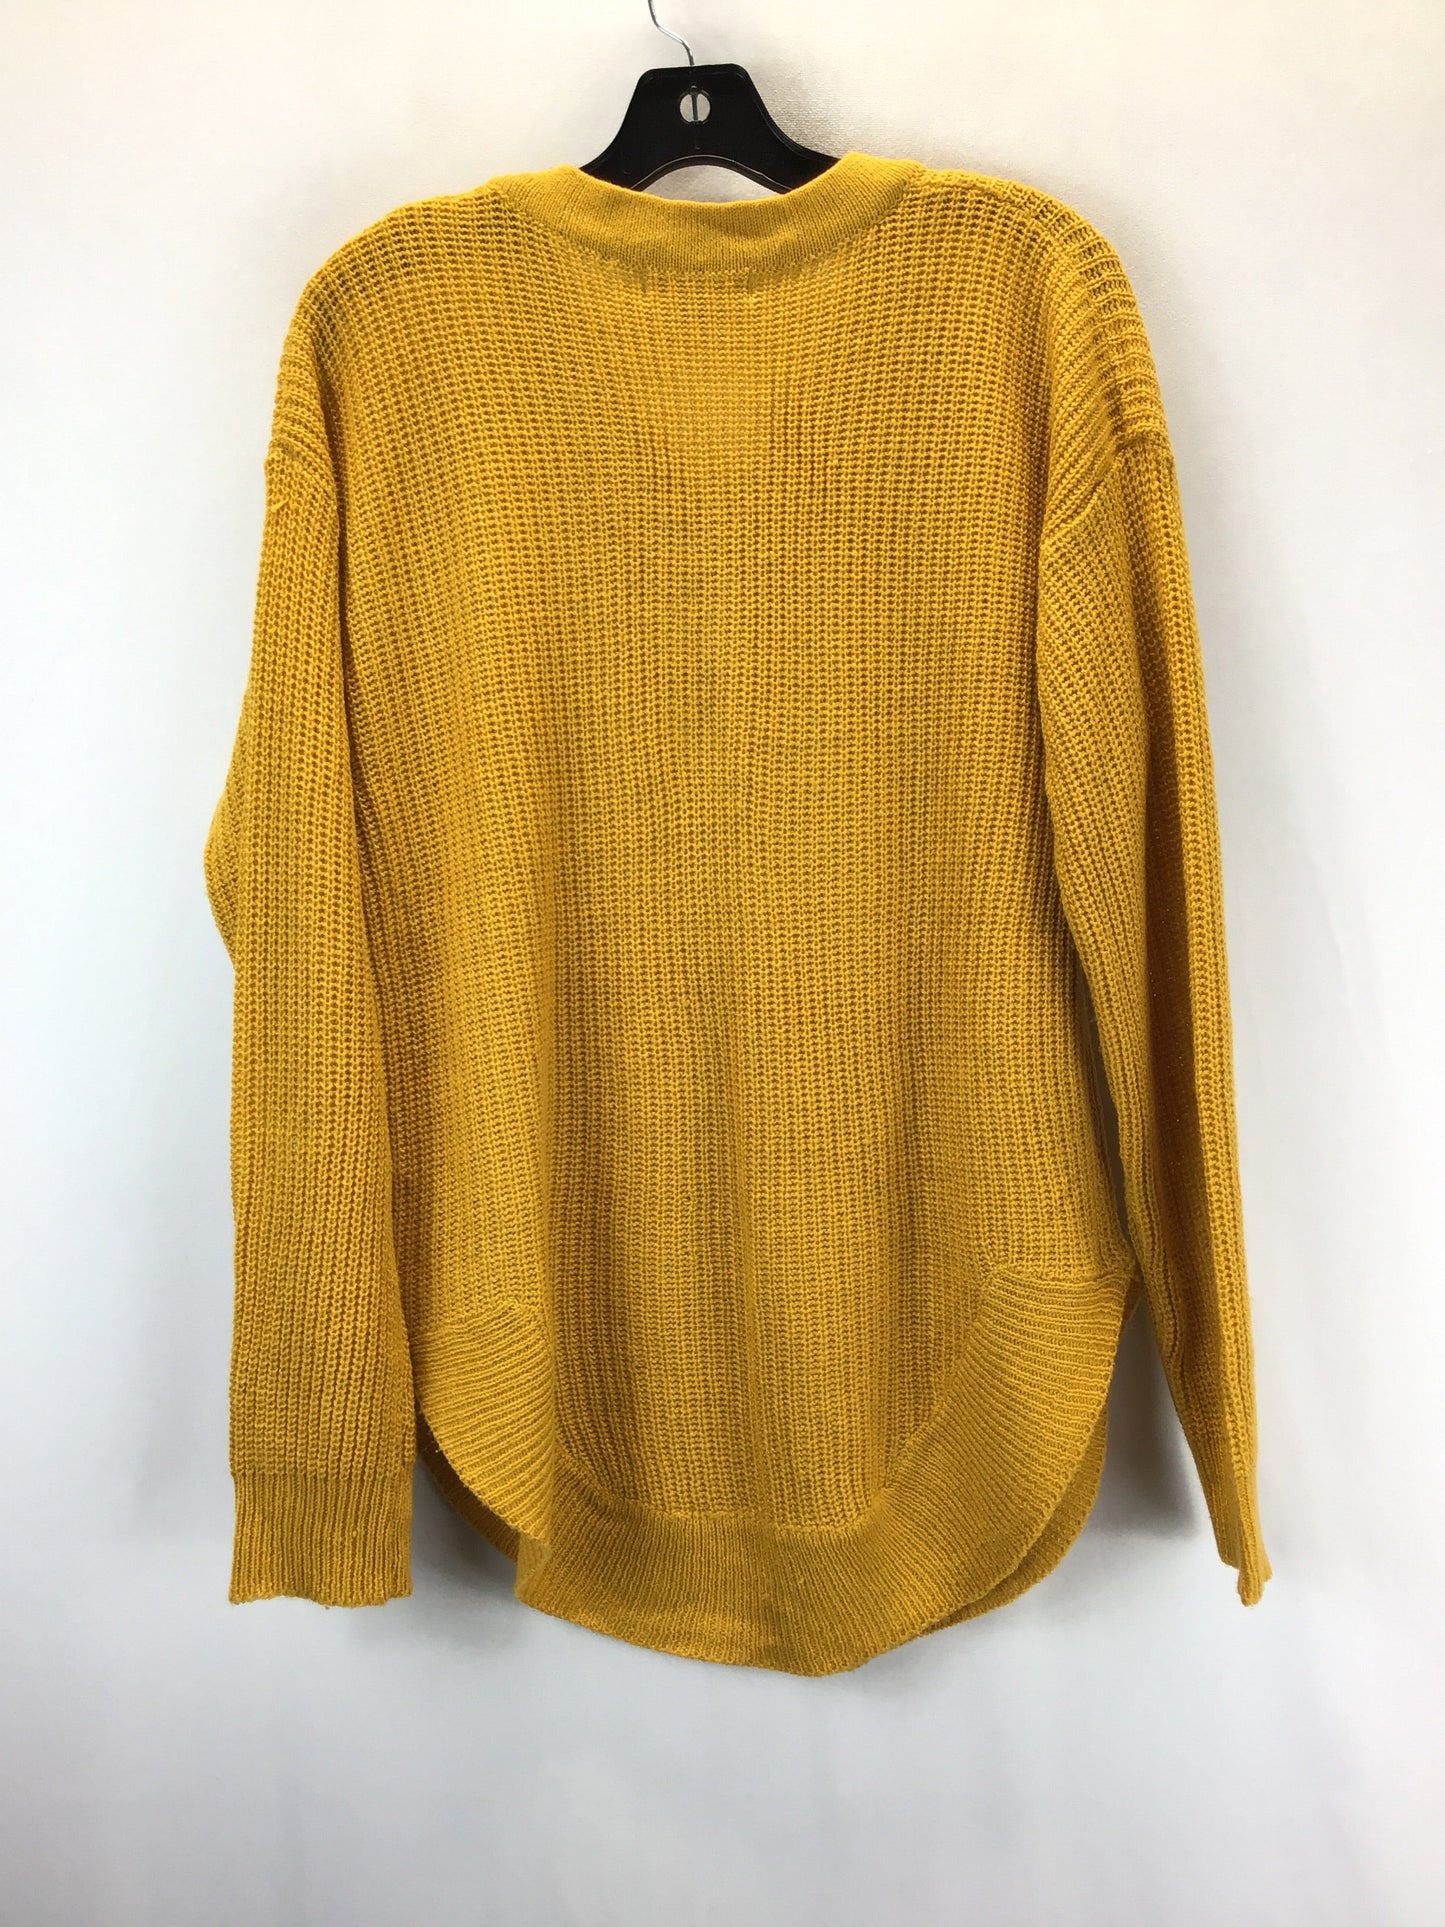 Sweater By Caren Sport  Size: 2x